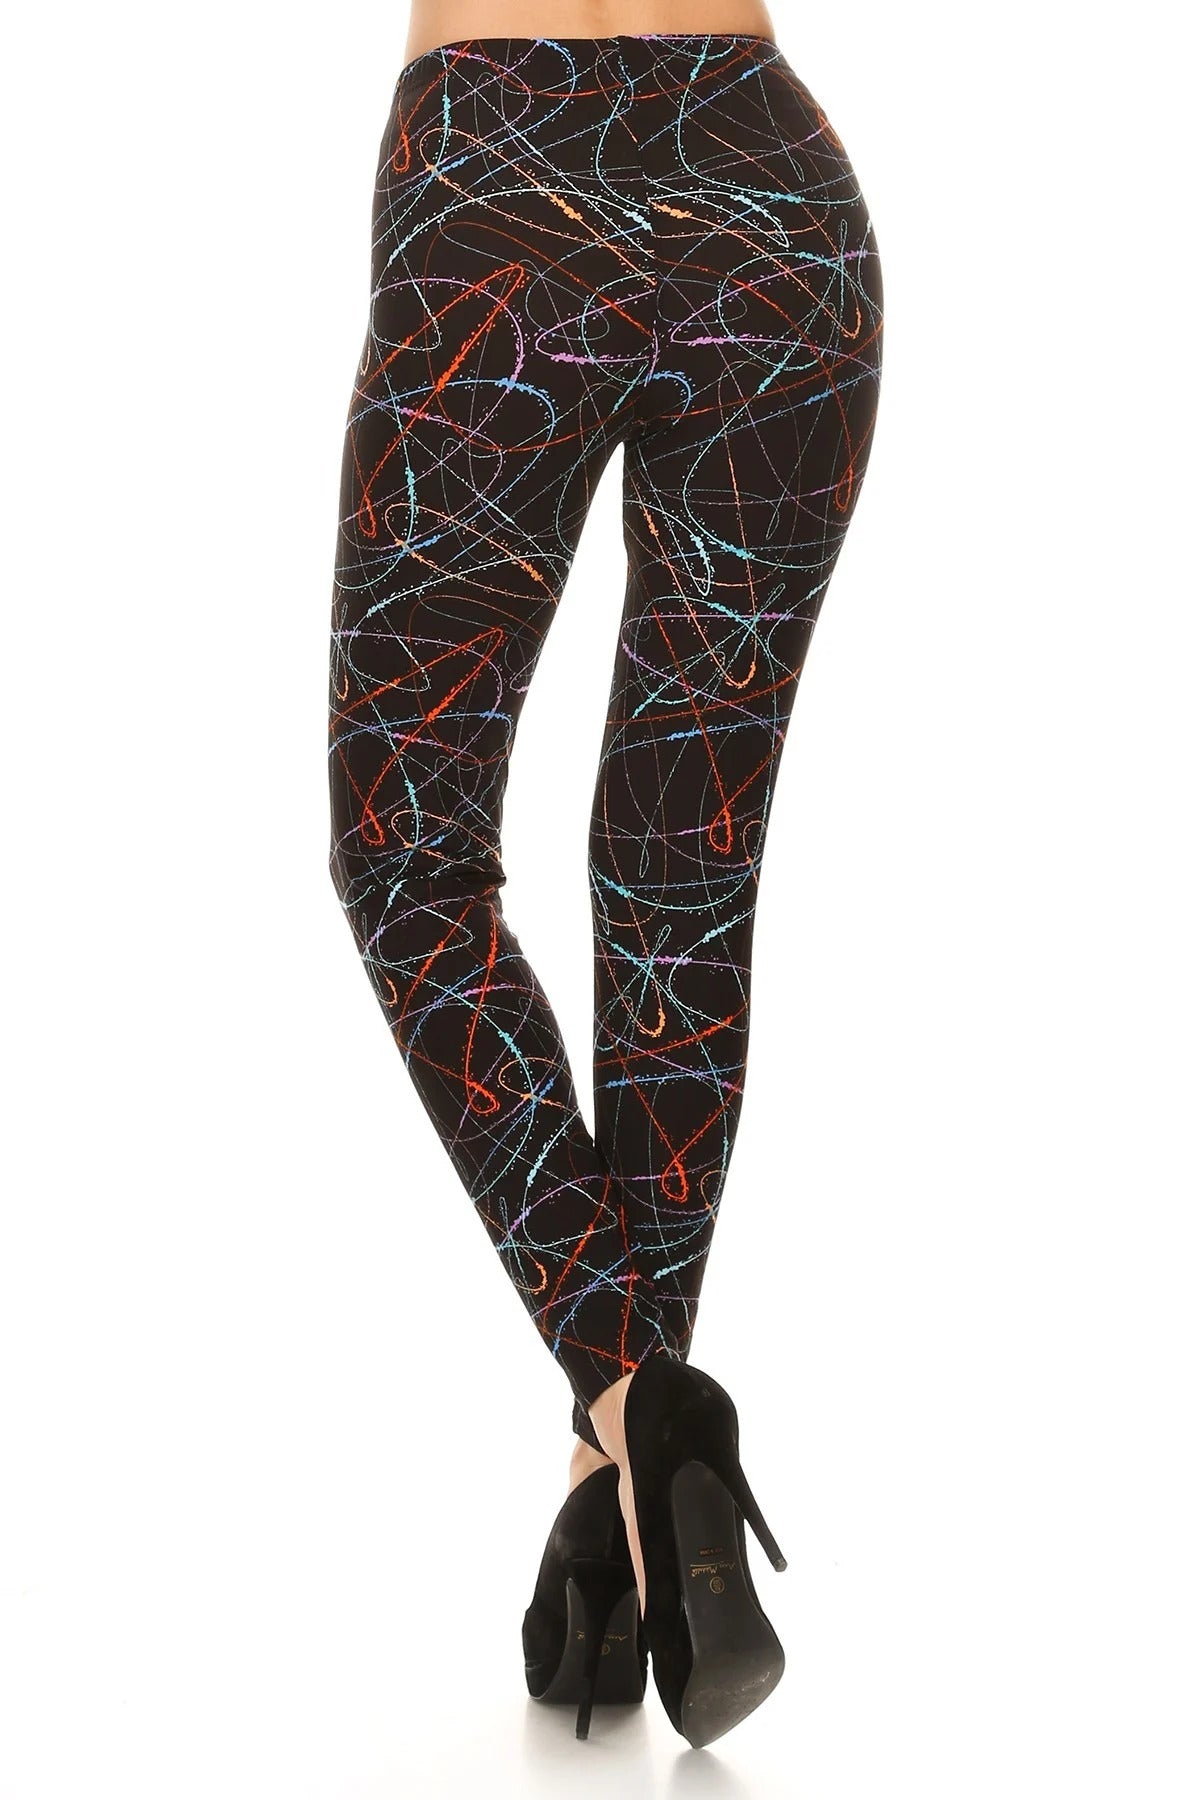 FZ Women's Multicolored Scribble Print, High Waisted Leggings - FZwear